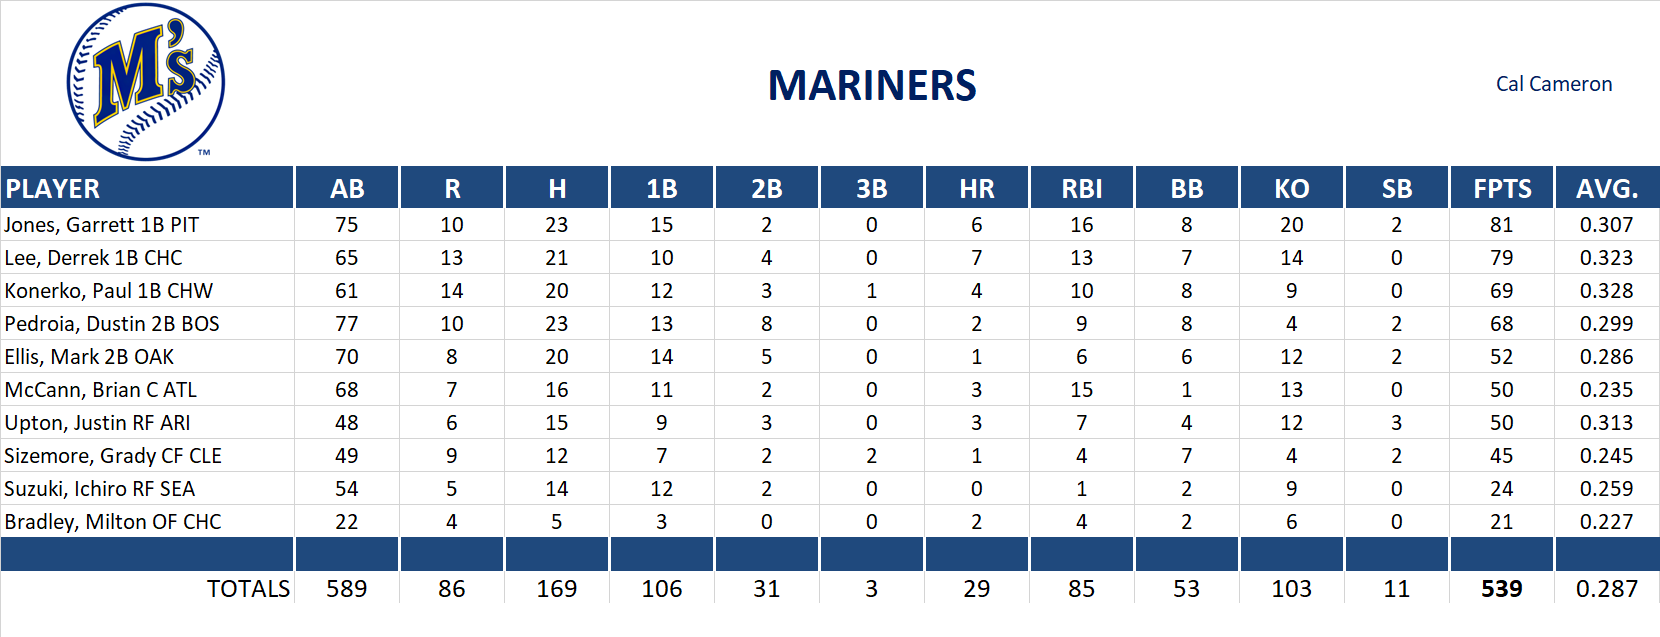 2009 Major League Baseball Pool Playoff Team Stats